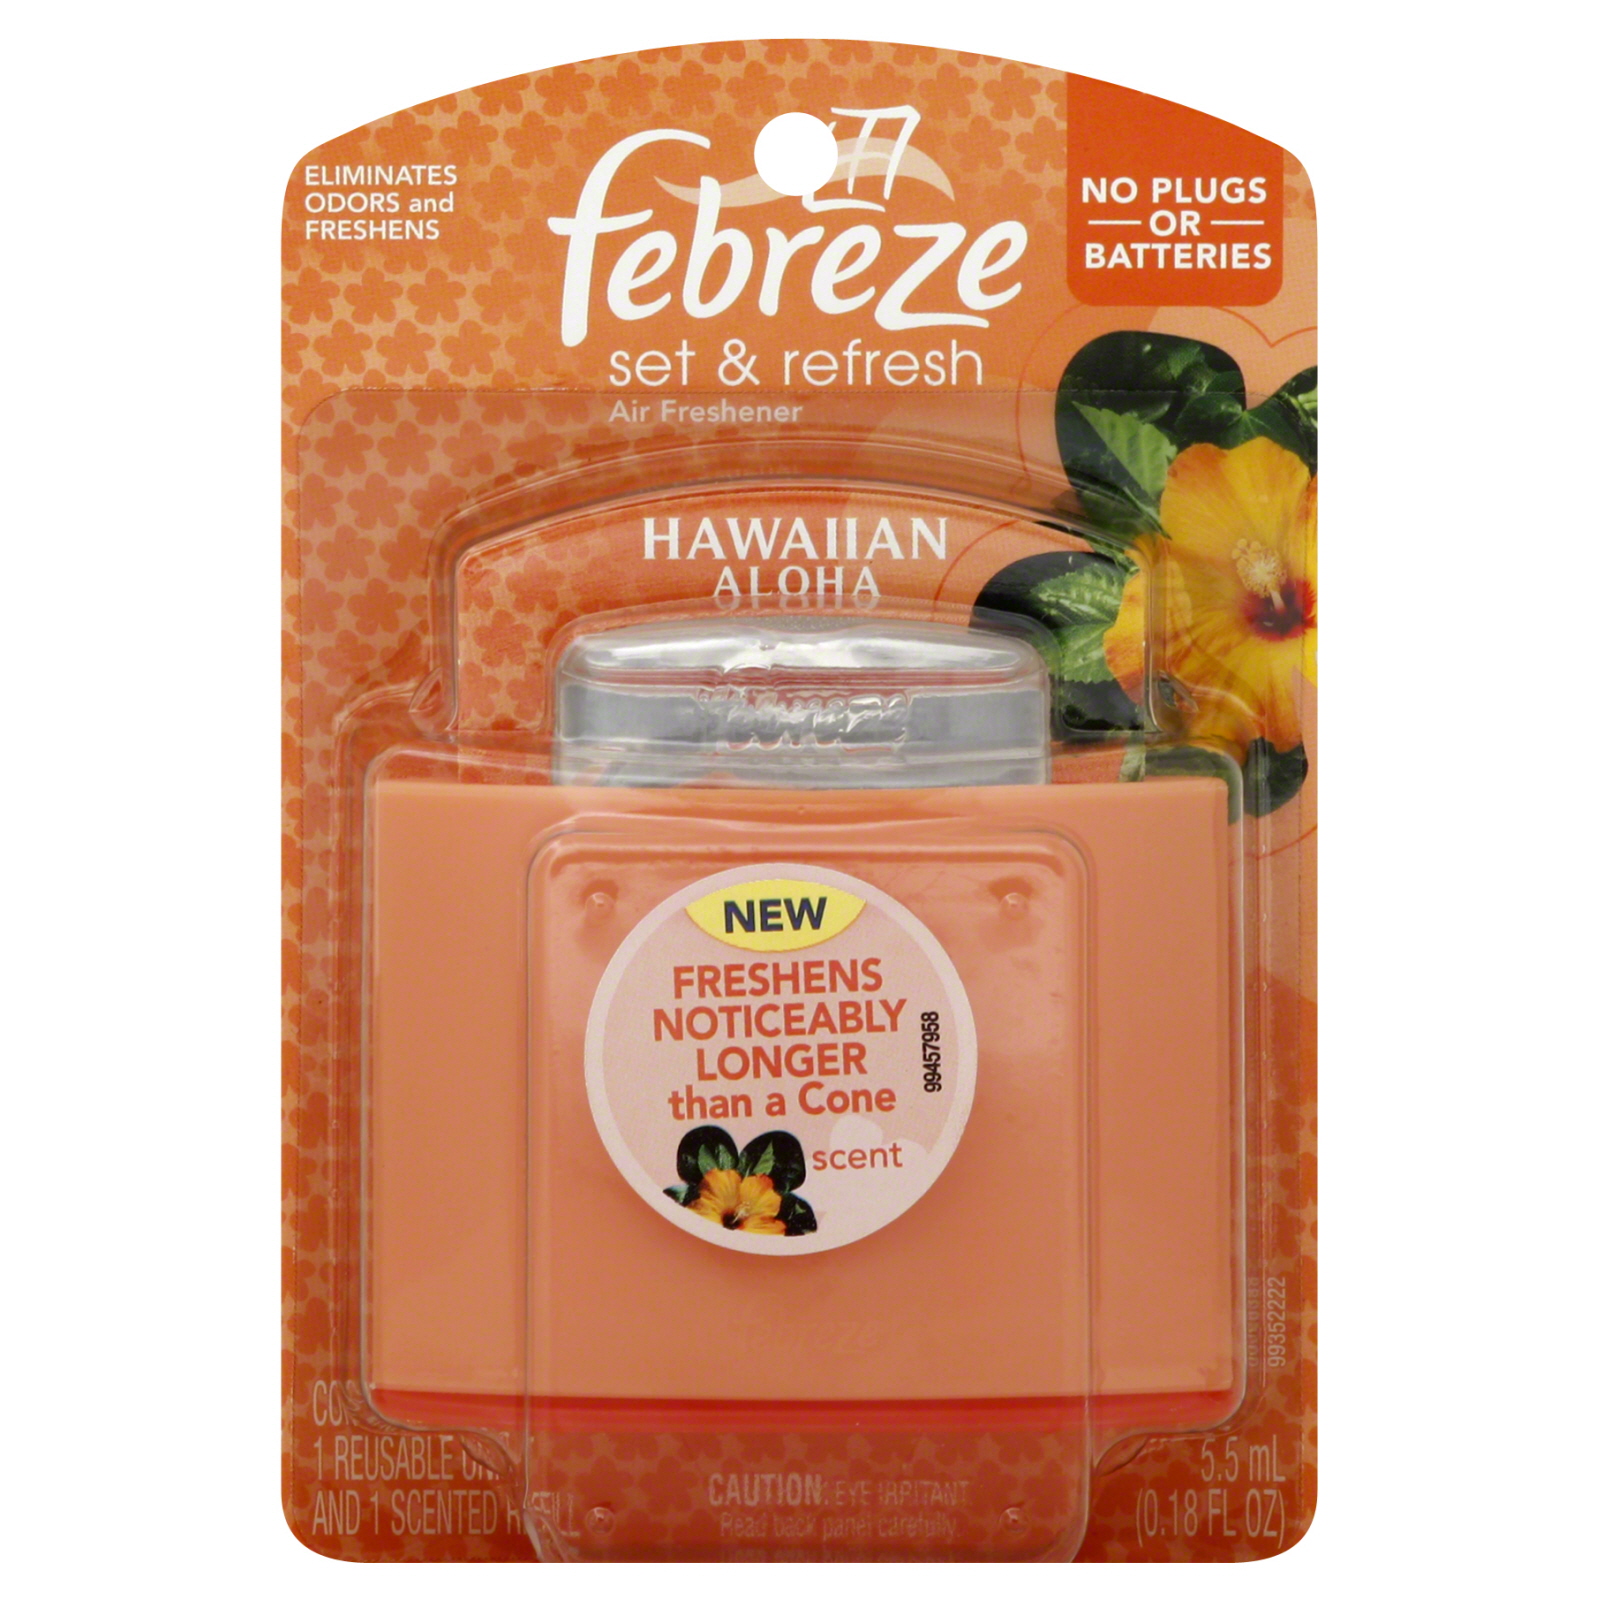 Febreze Set & Refresh Air Freshener, Hawaiian Aloha 1 freshener